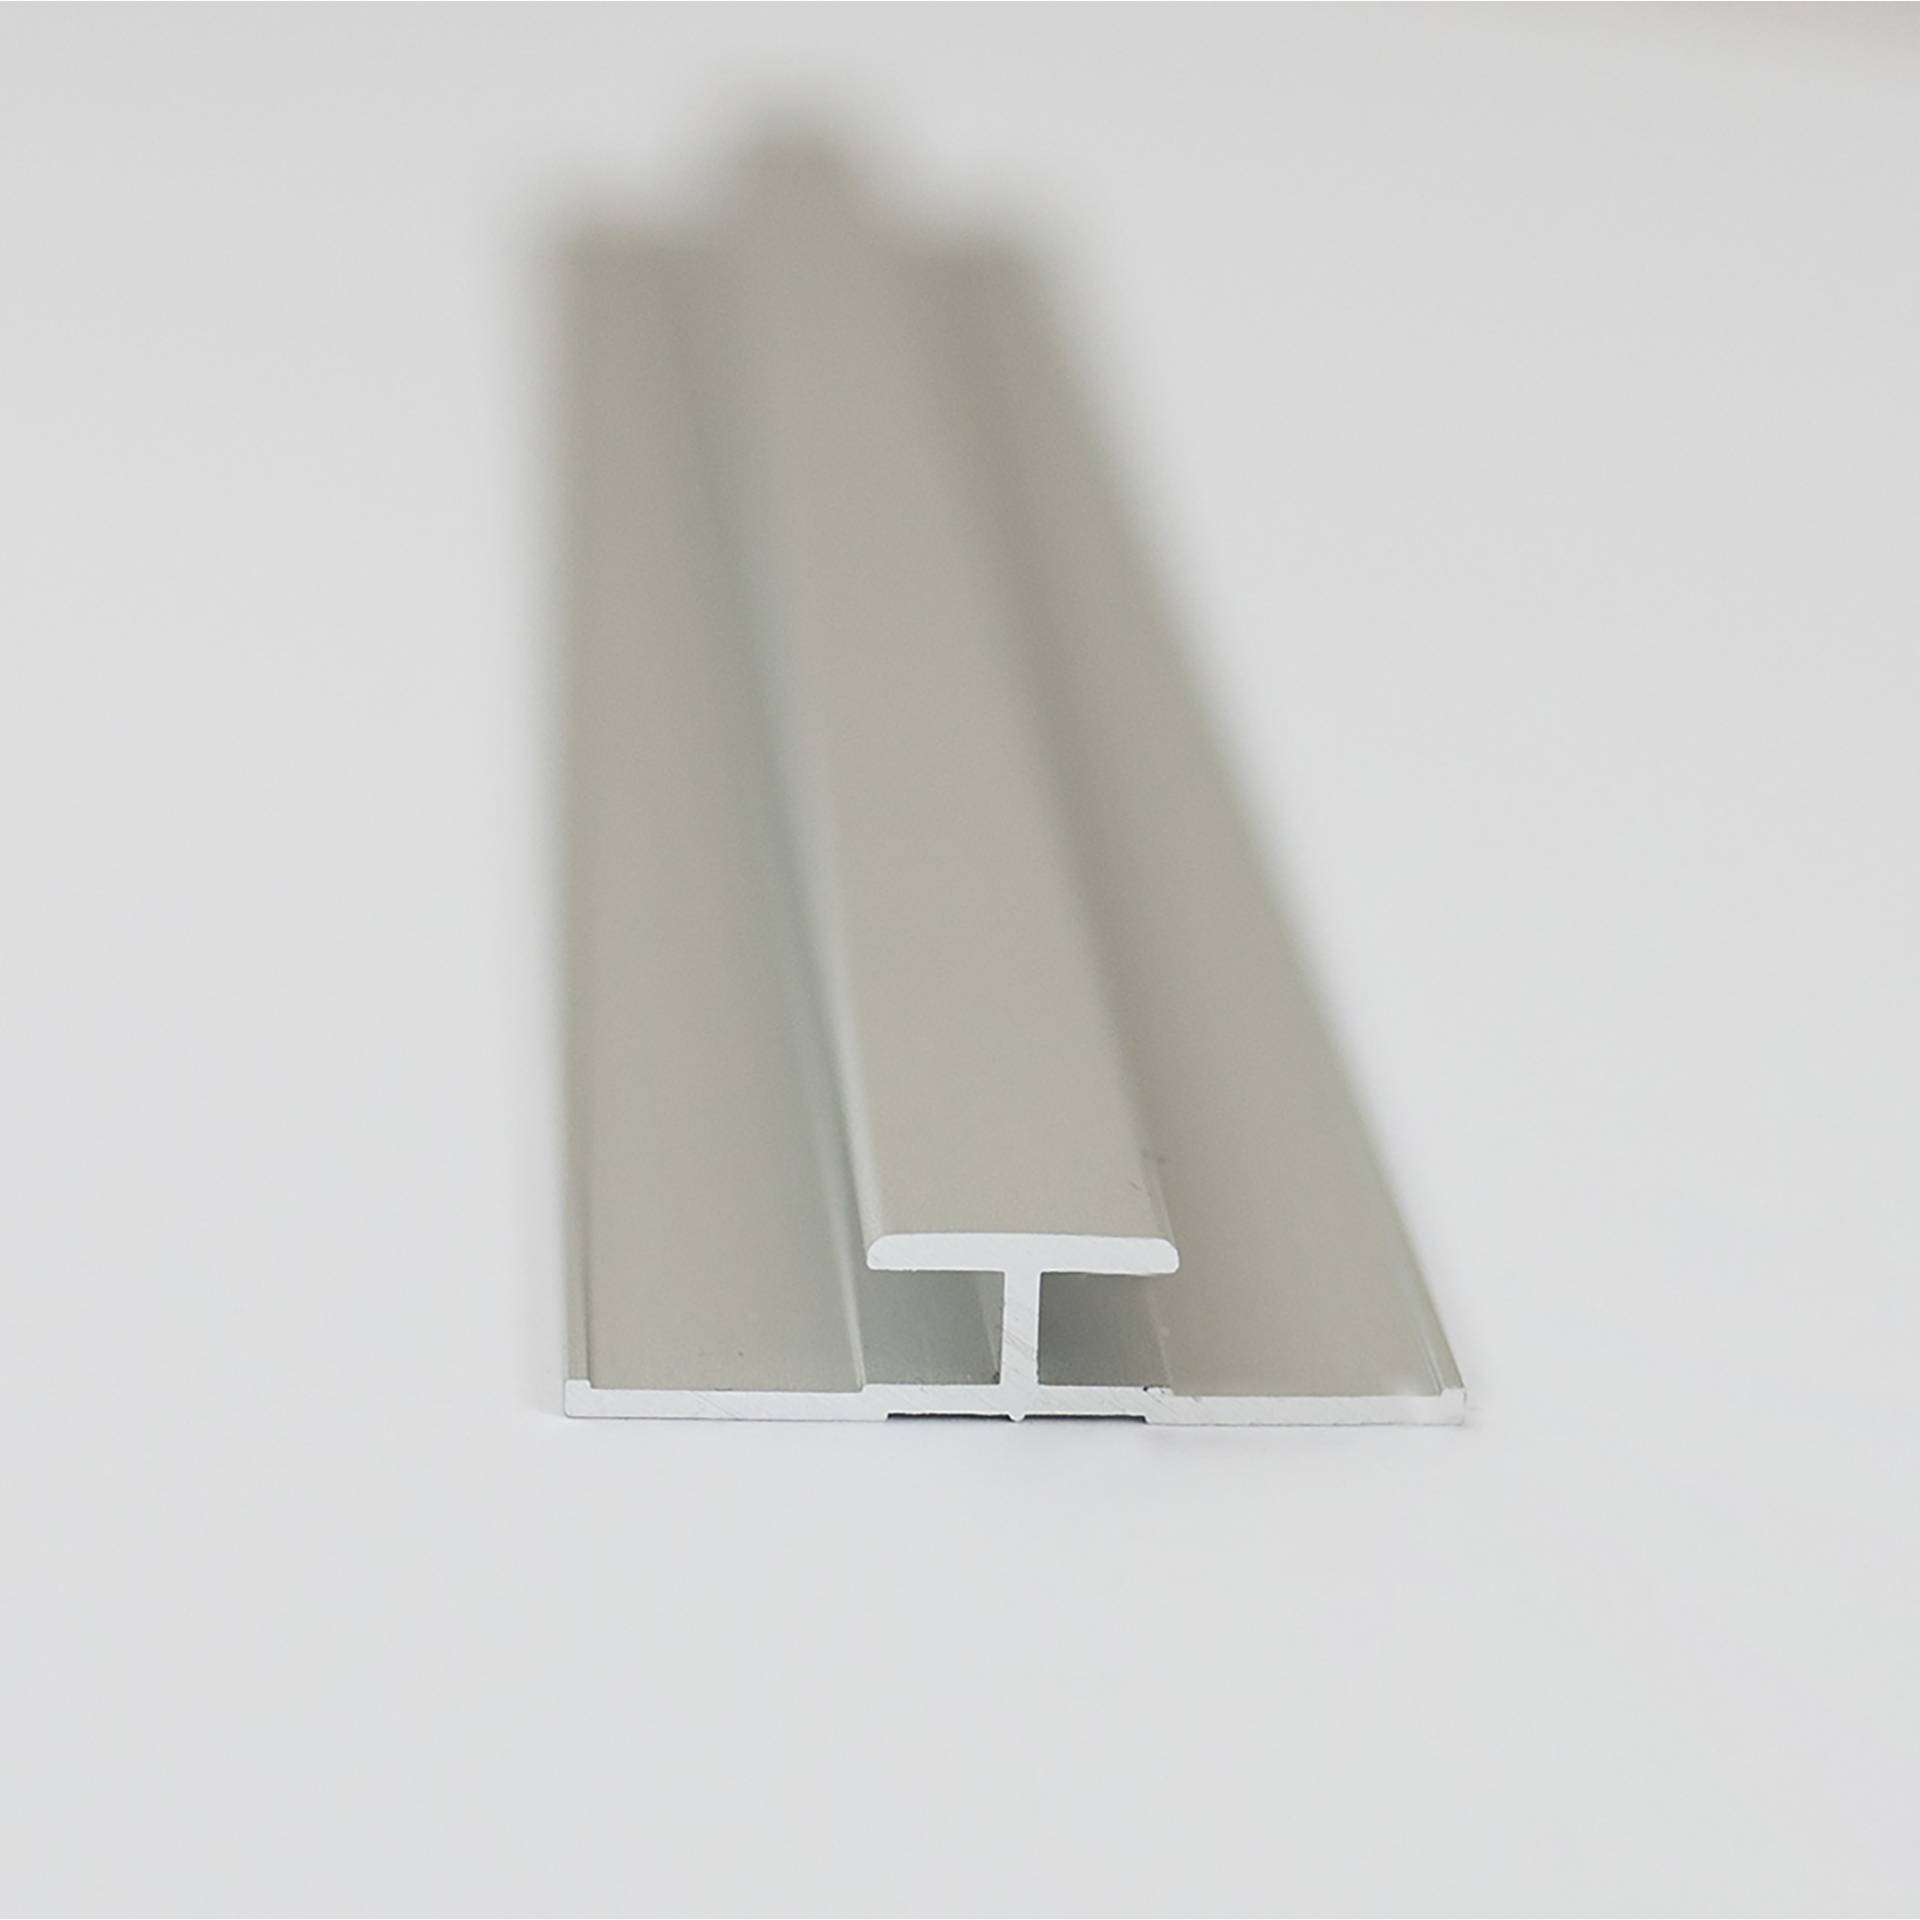 Breuer Verbindungsprofil für Rückwandplatten, alu silber matt, 2550 mm von Breuer